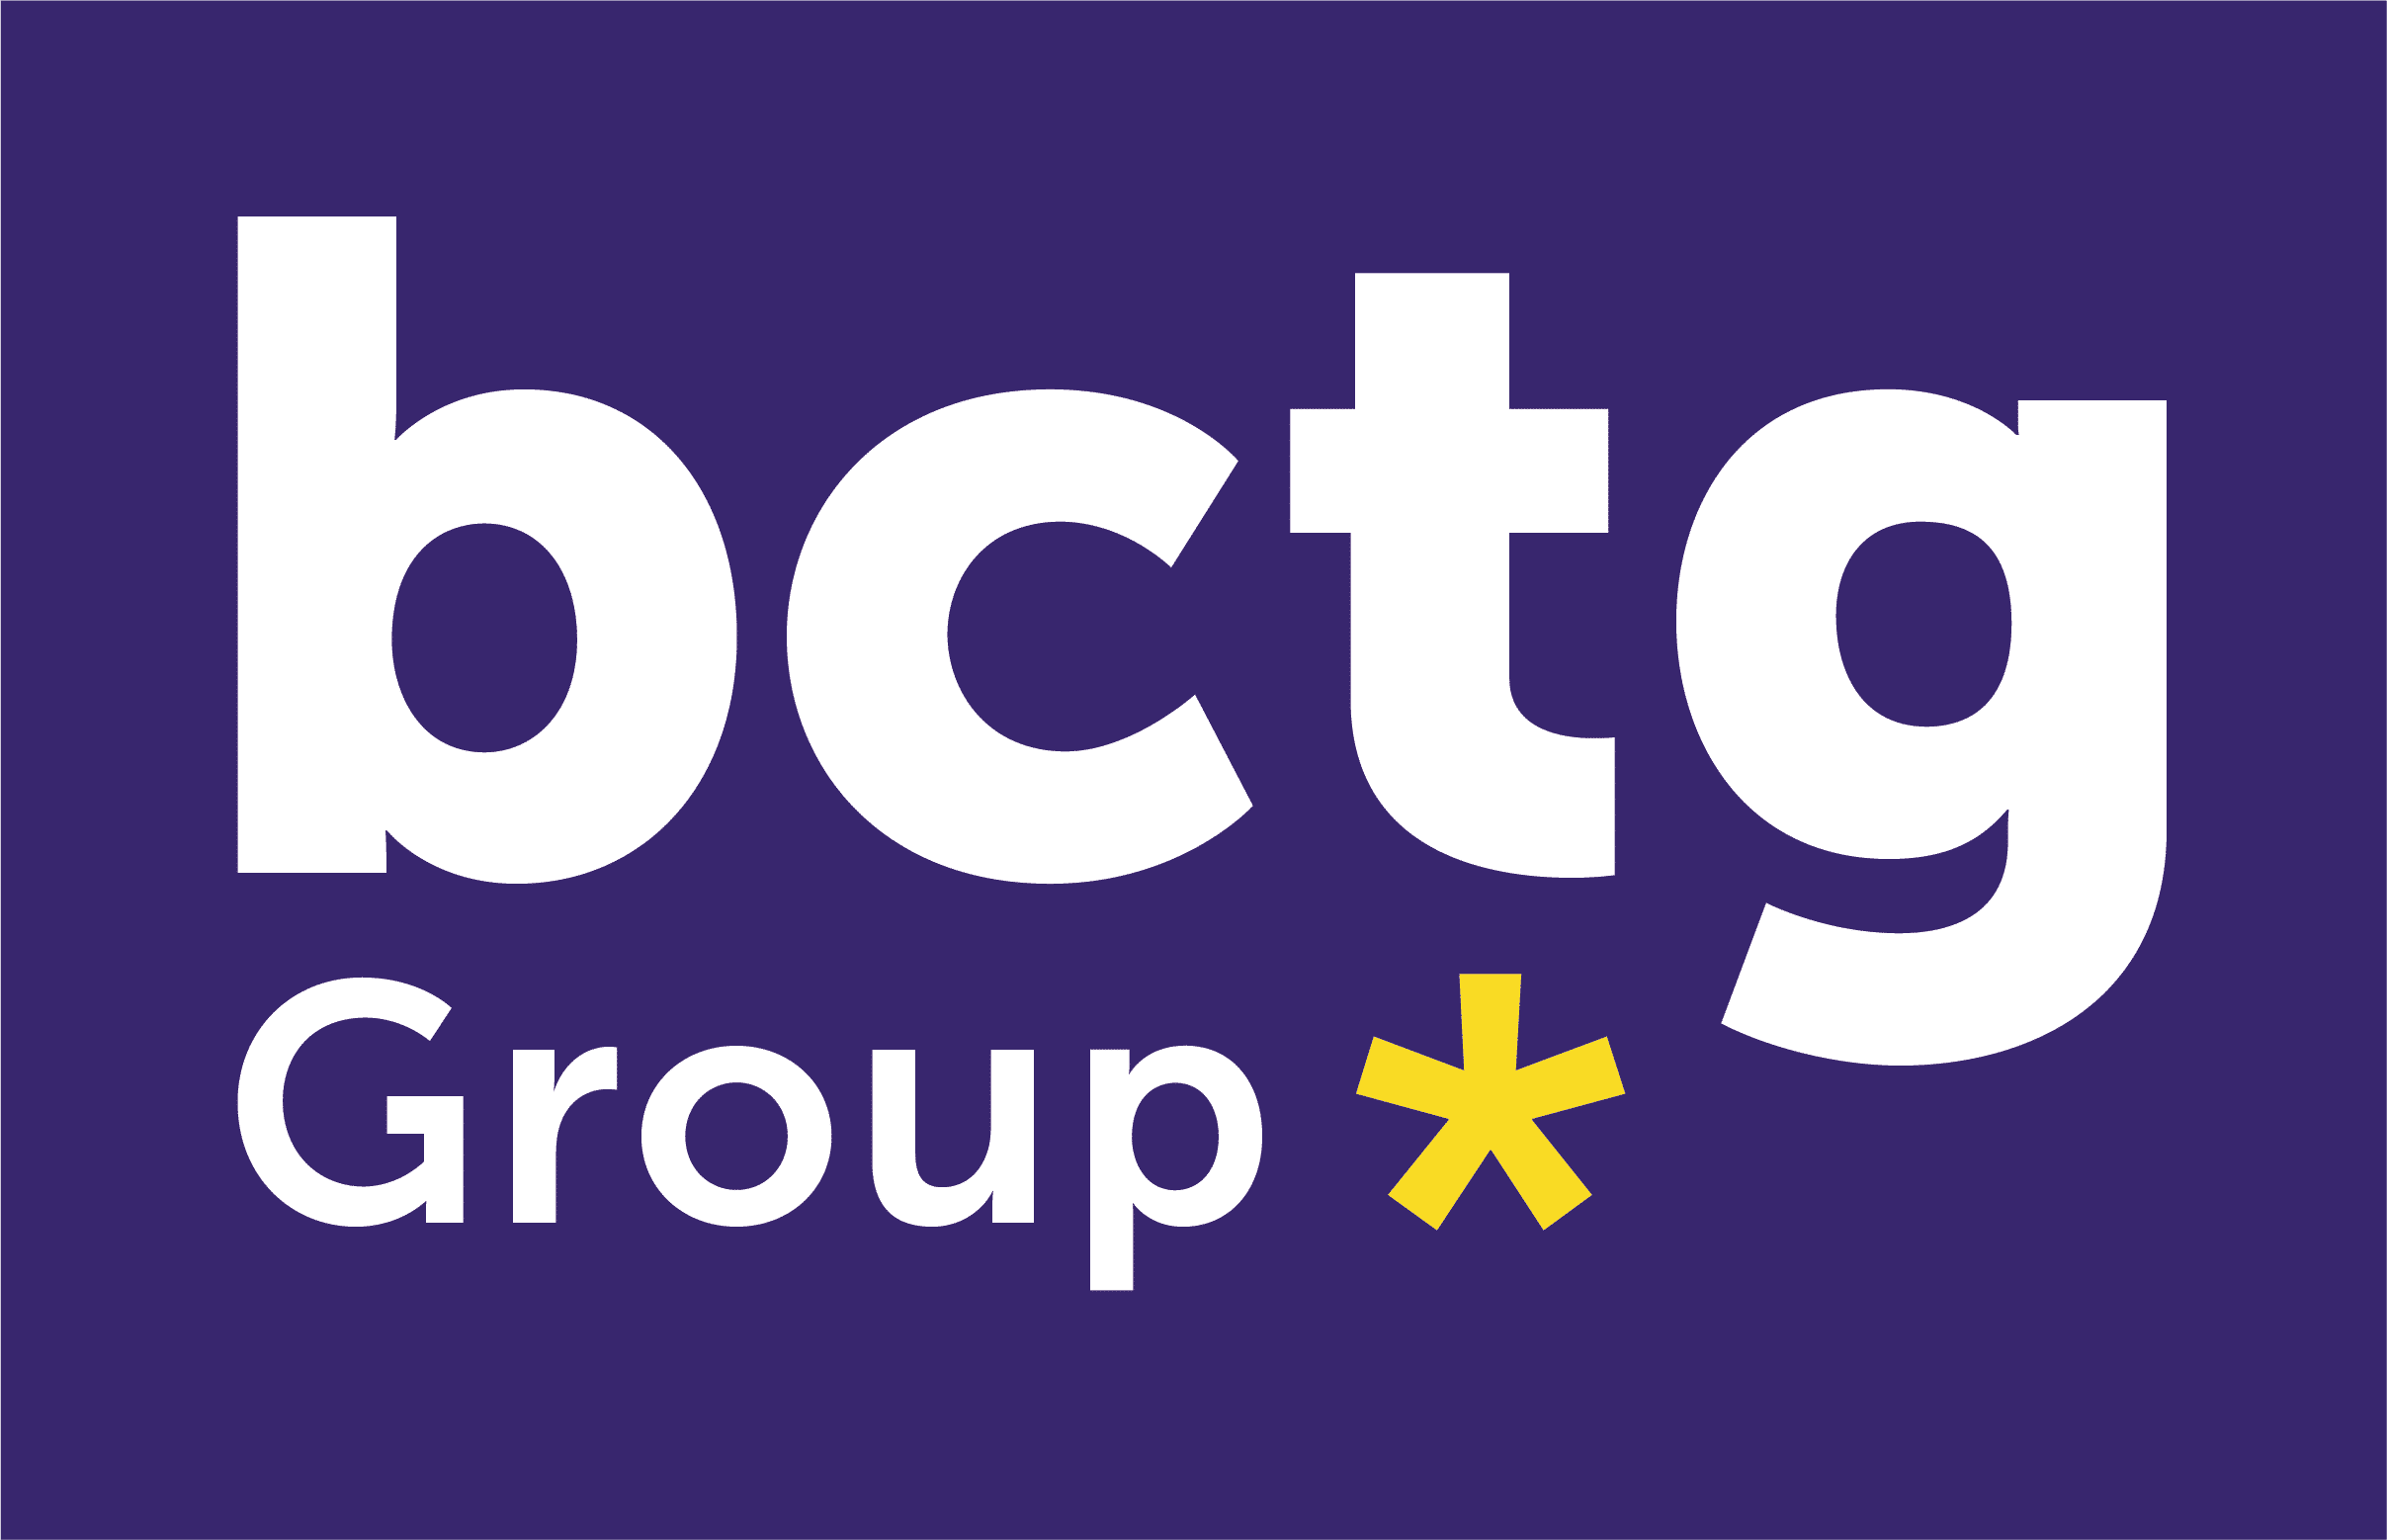 BCTG Group White On Purple LARGE